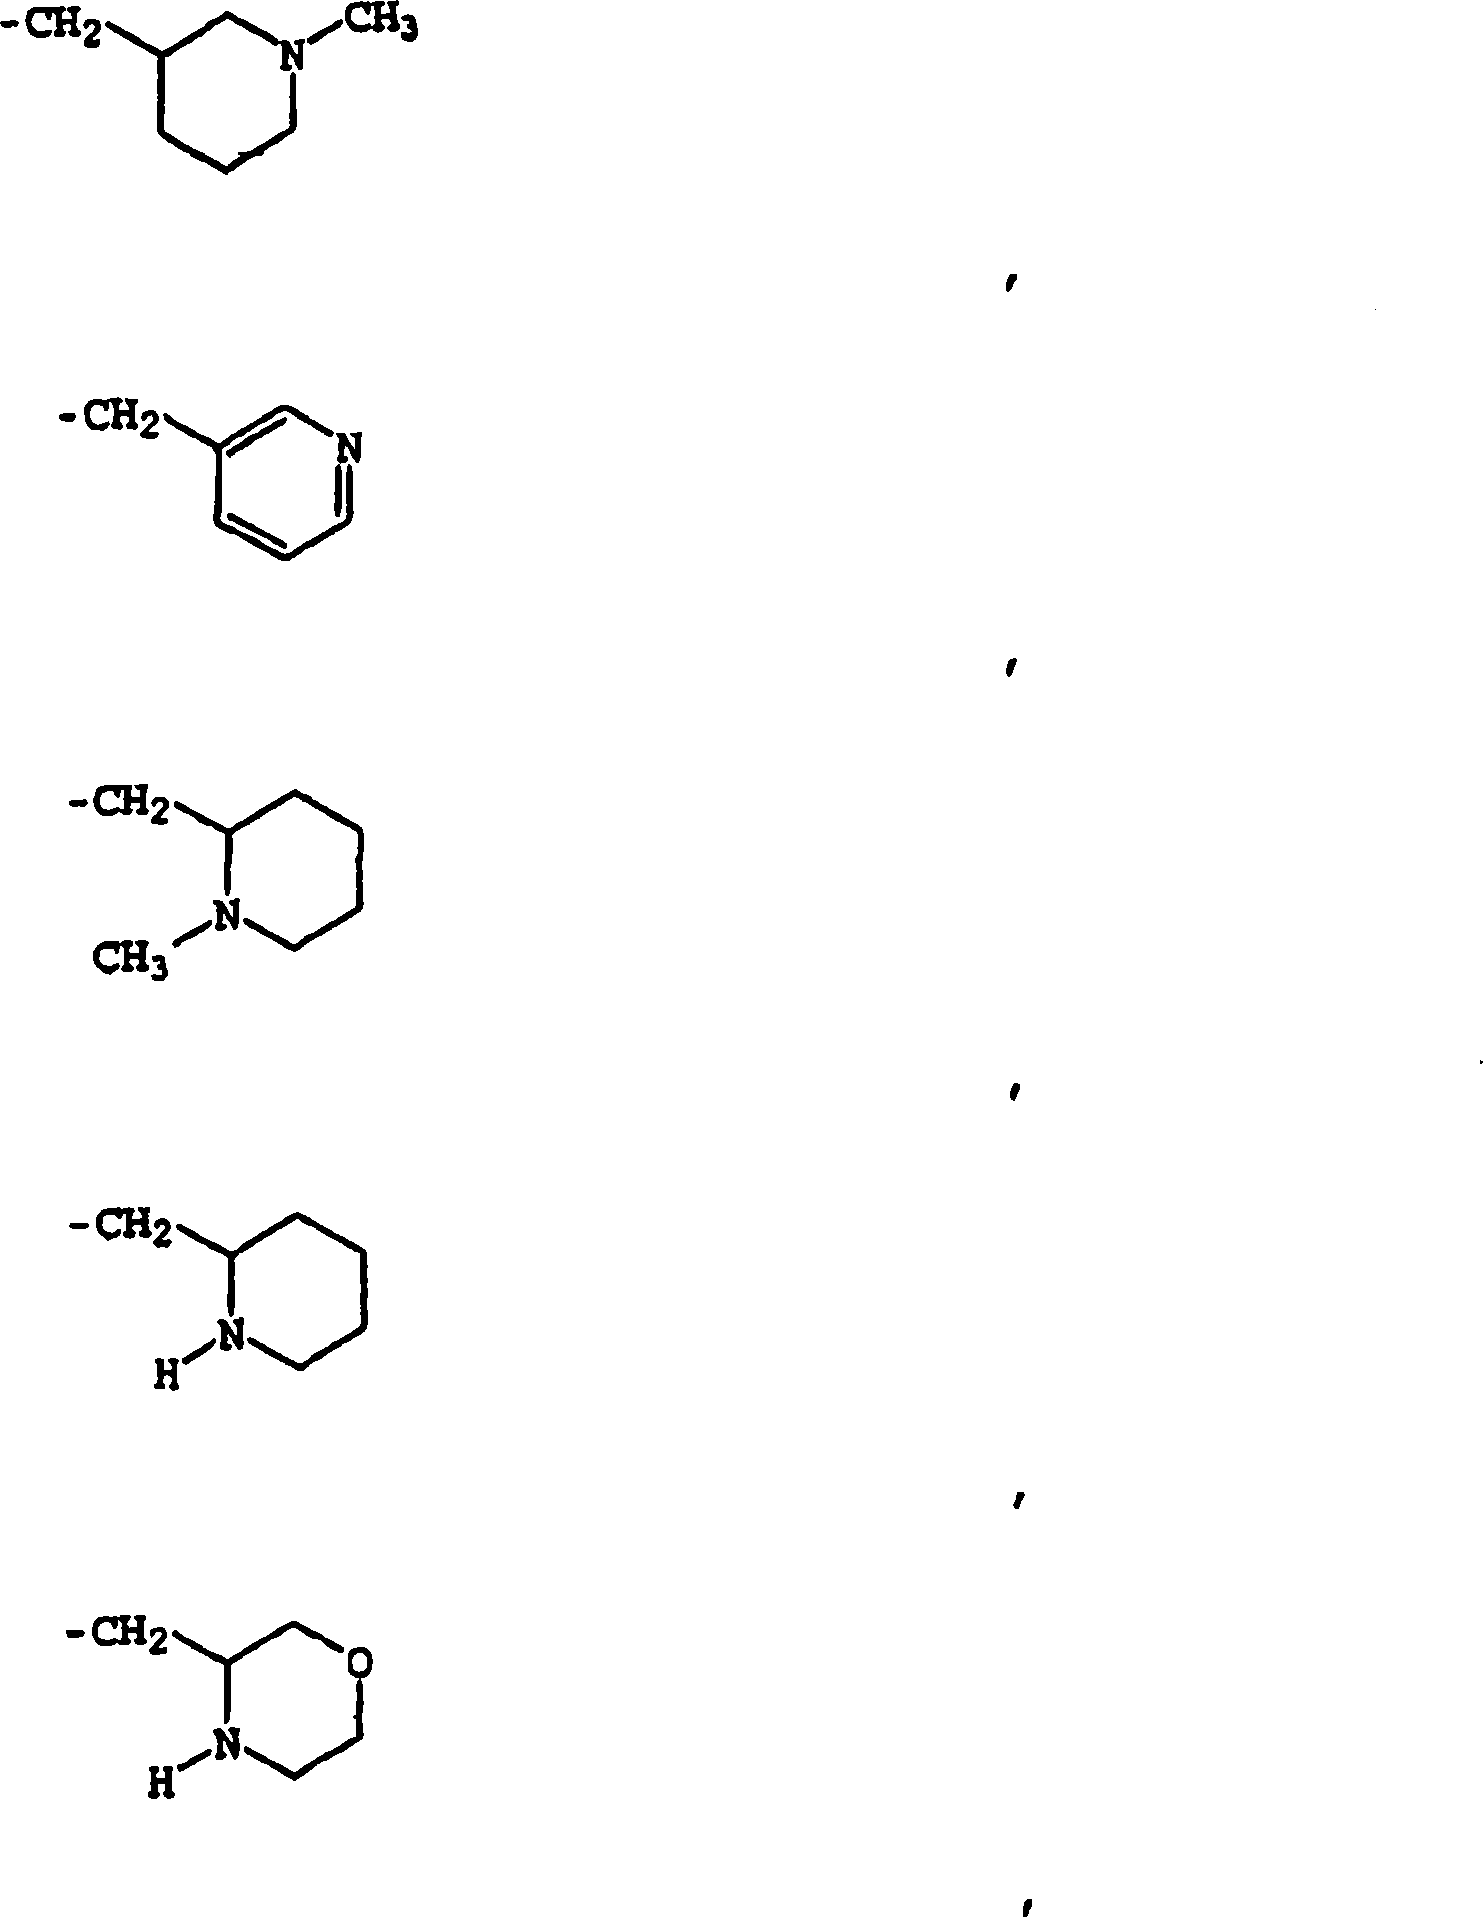 Bisarylurea derivatives useful for inhibiting CHK1